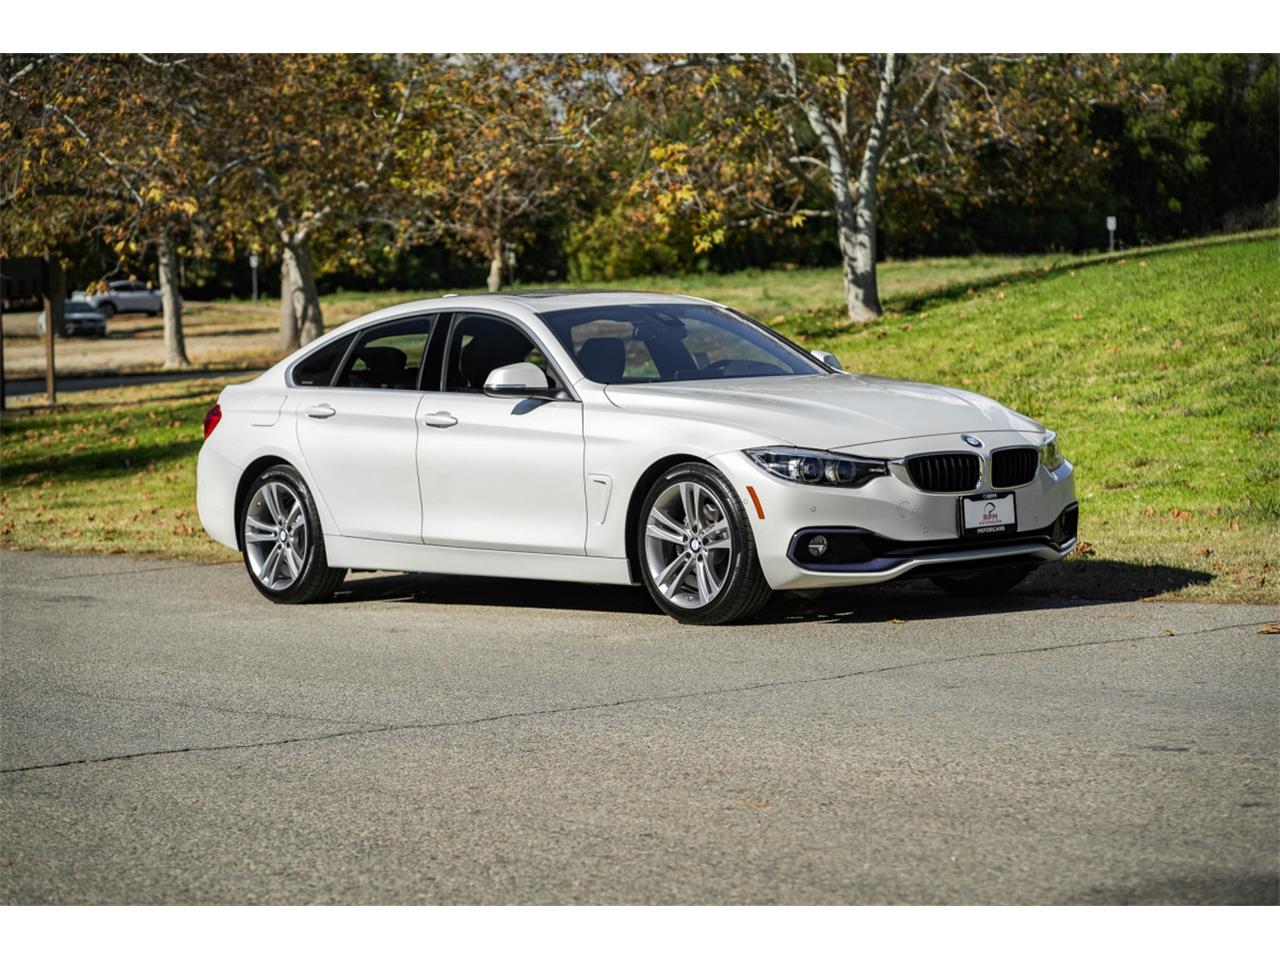 For Sale: 2019 BMW 4 Series in Sherman Oaks, California for sale in Sherman Oaks, CA